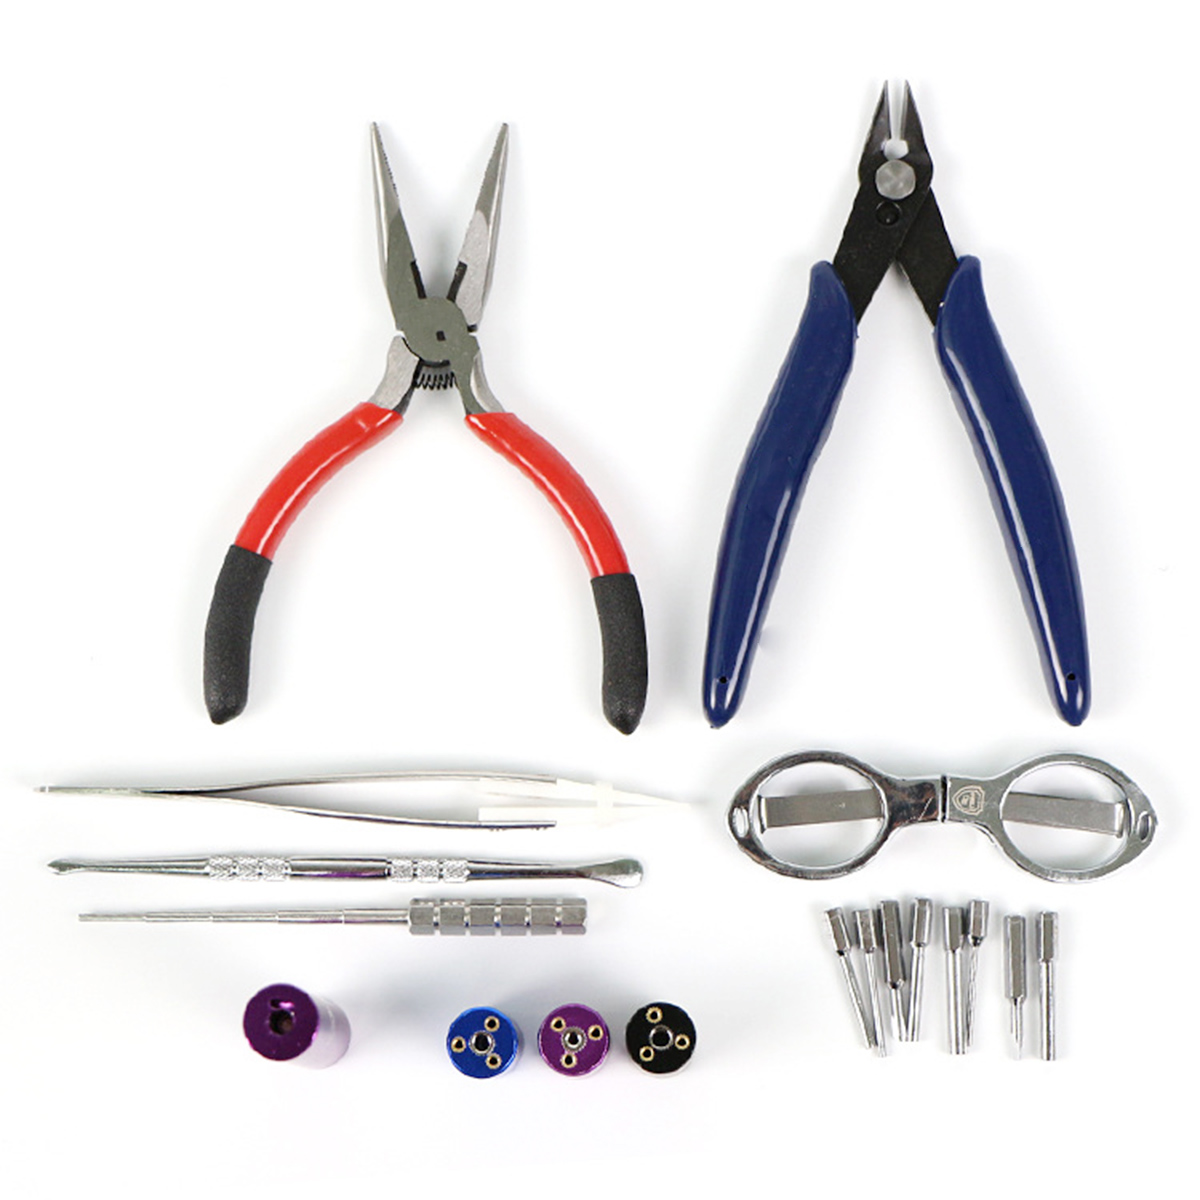 Electronic-Cigarette-Kit-Box-Vape-Tool-Kits-Tools-Carry-Bag-With-Tweezer-Pliers-For-DIY-Atomizer-1271026